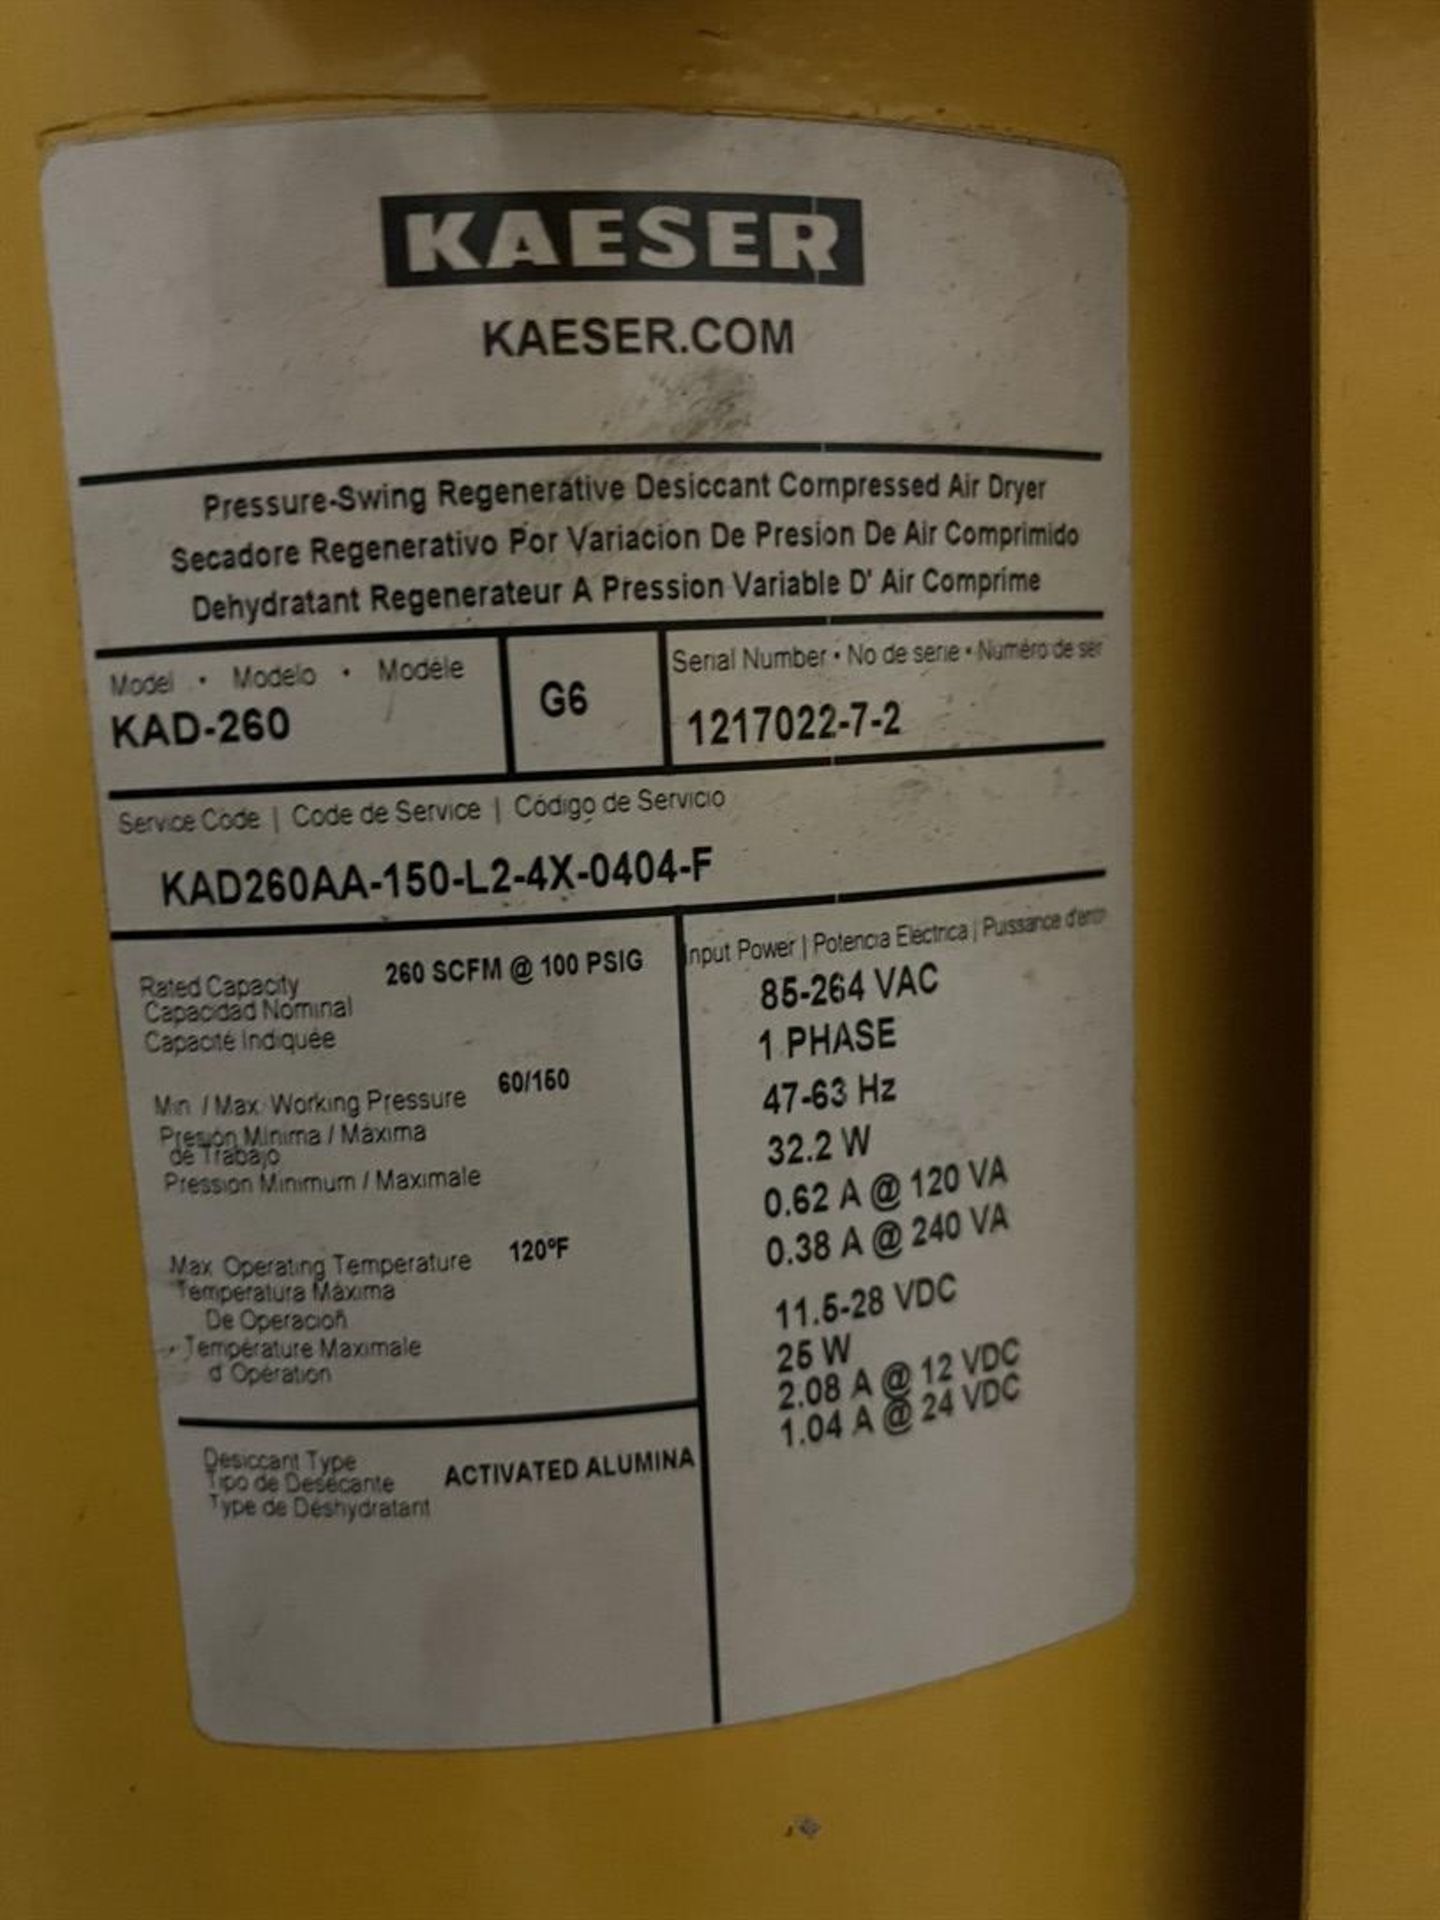 KAESER KAD-260 Compressed Air Dryer, s/n 1217022-7-2, 260 SCFM @ 100 PSIG, 60-150 PSI Working - Image 4 of 5